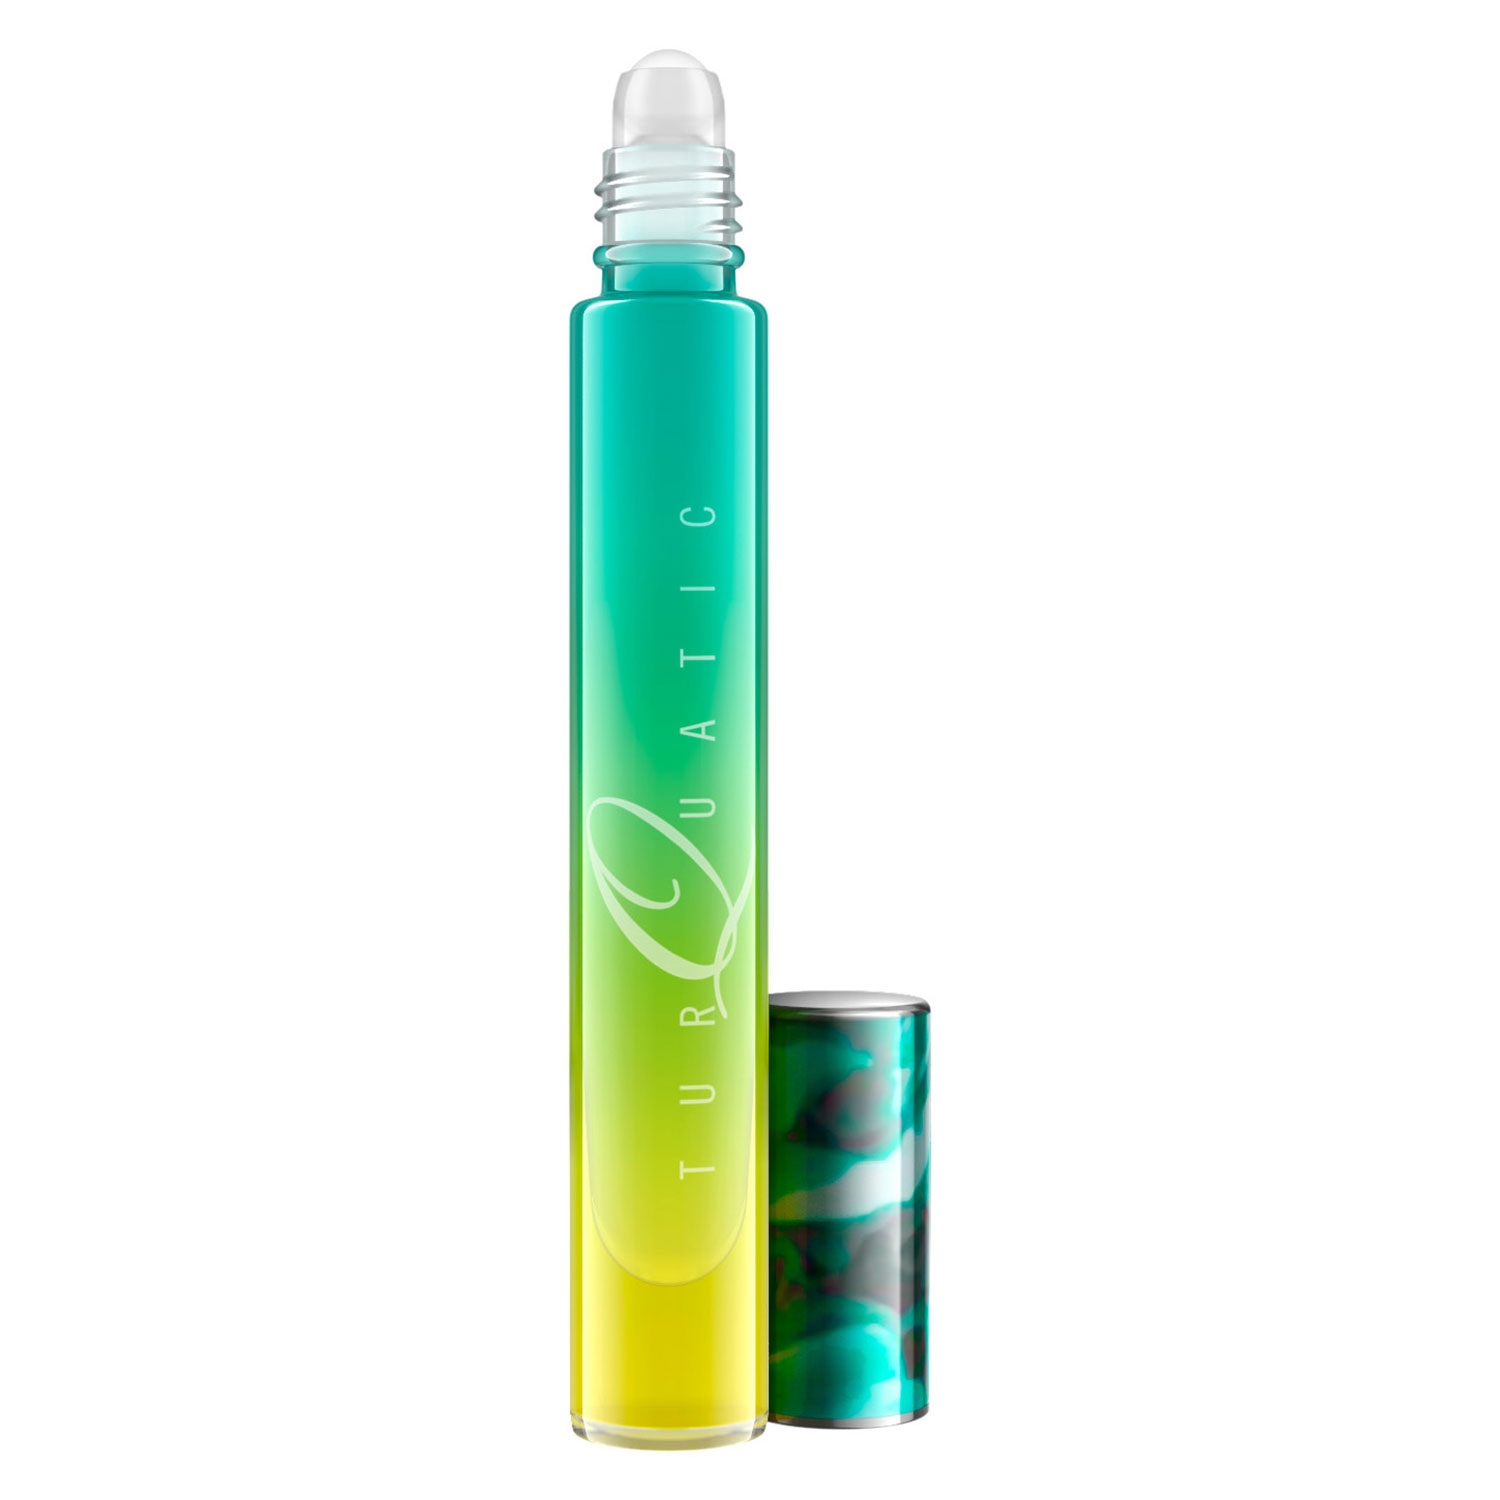 Produktbild von M·A·C Fragrances - Turquatic Eau de Parfum Rollerball